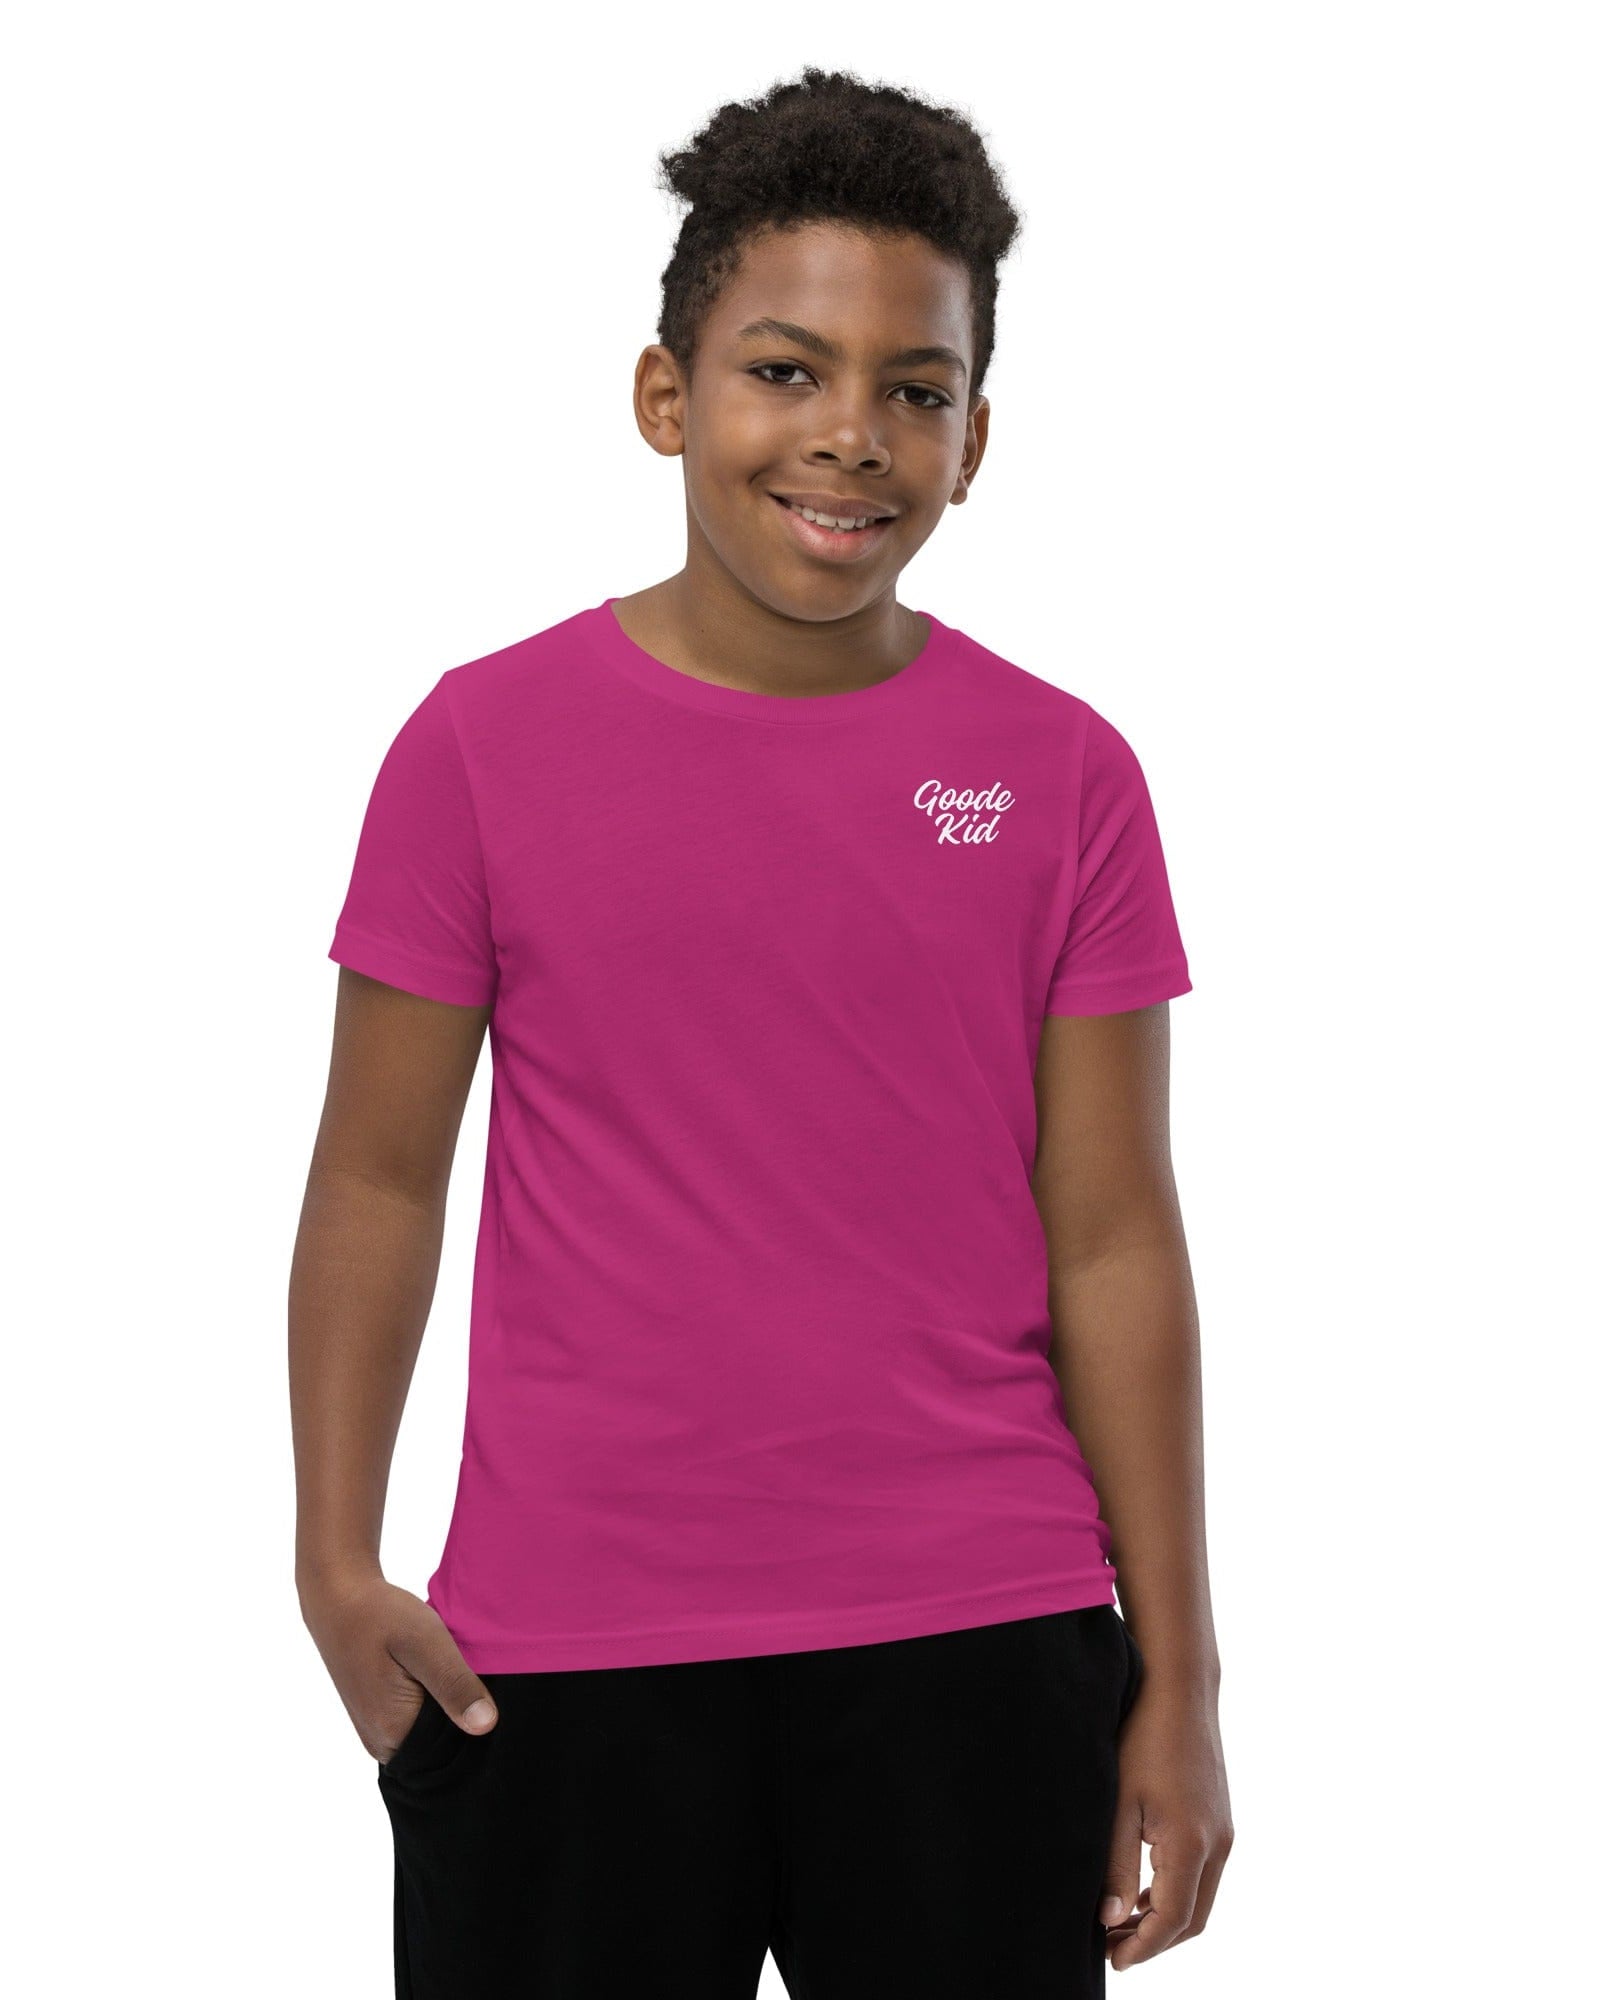 Goode Kid T-shirt | Youth Berry / S kids t-shirts Jolly & Goode